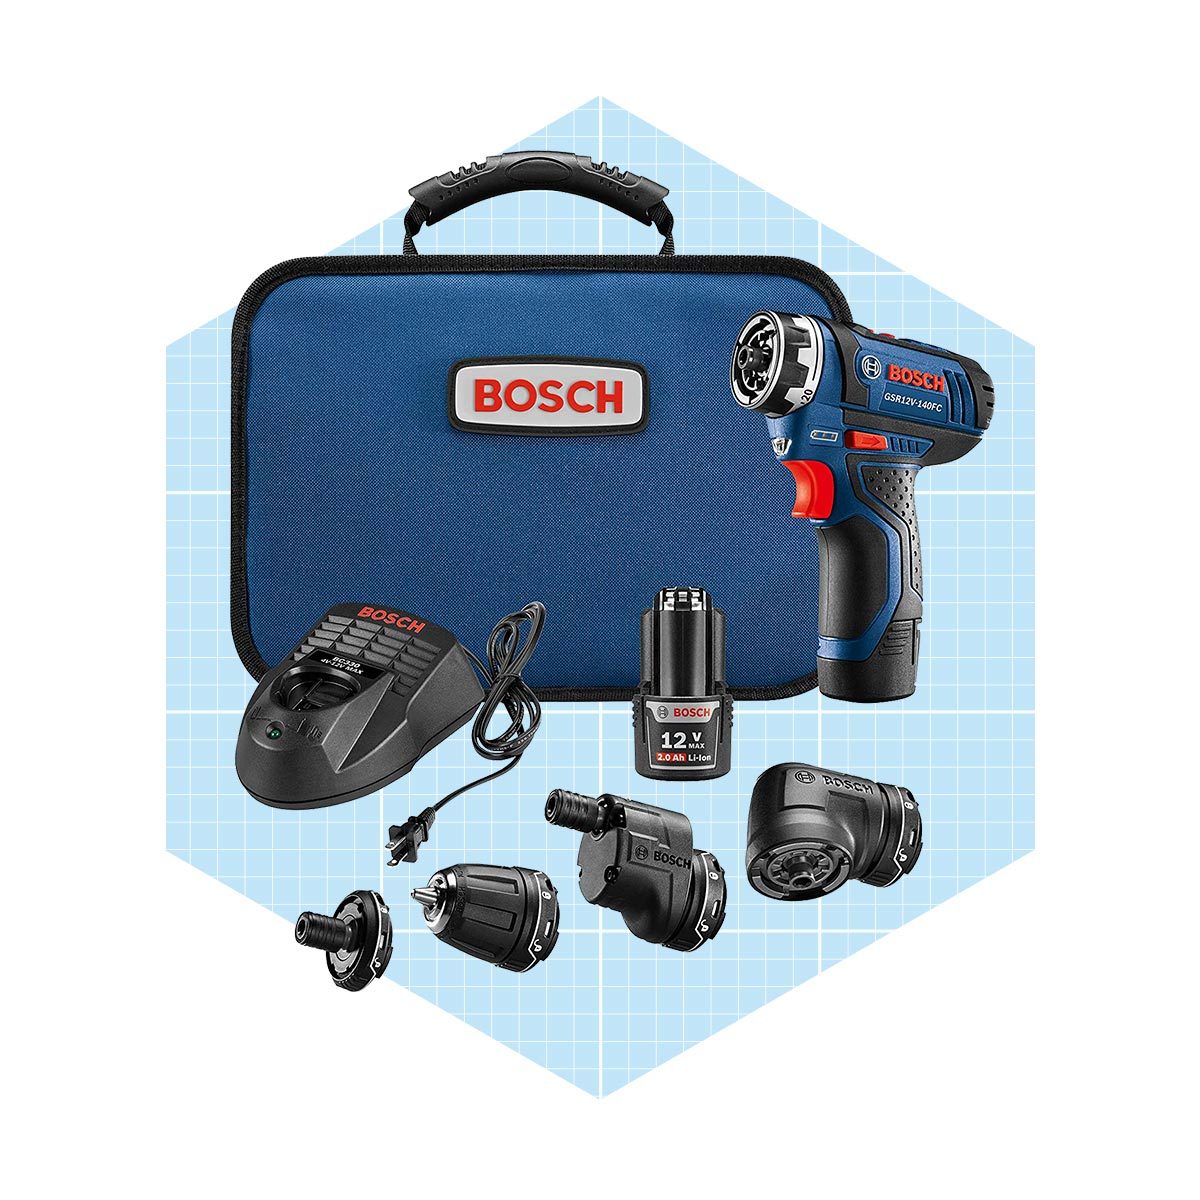 Bosch Cordless Electric Screwdriver 12v Kit 5 In 1 Multi Head Power Drill Set